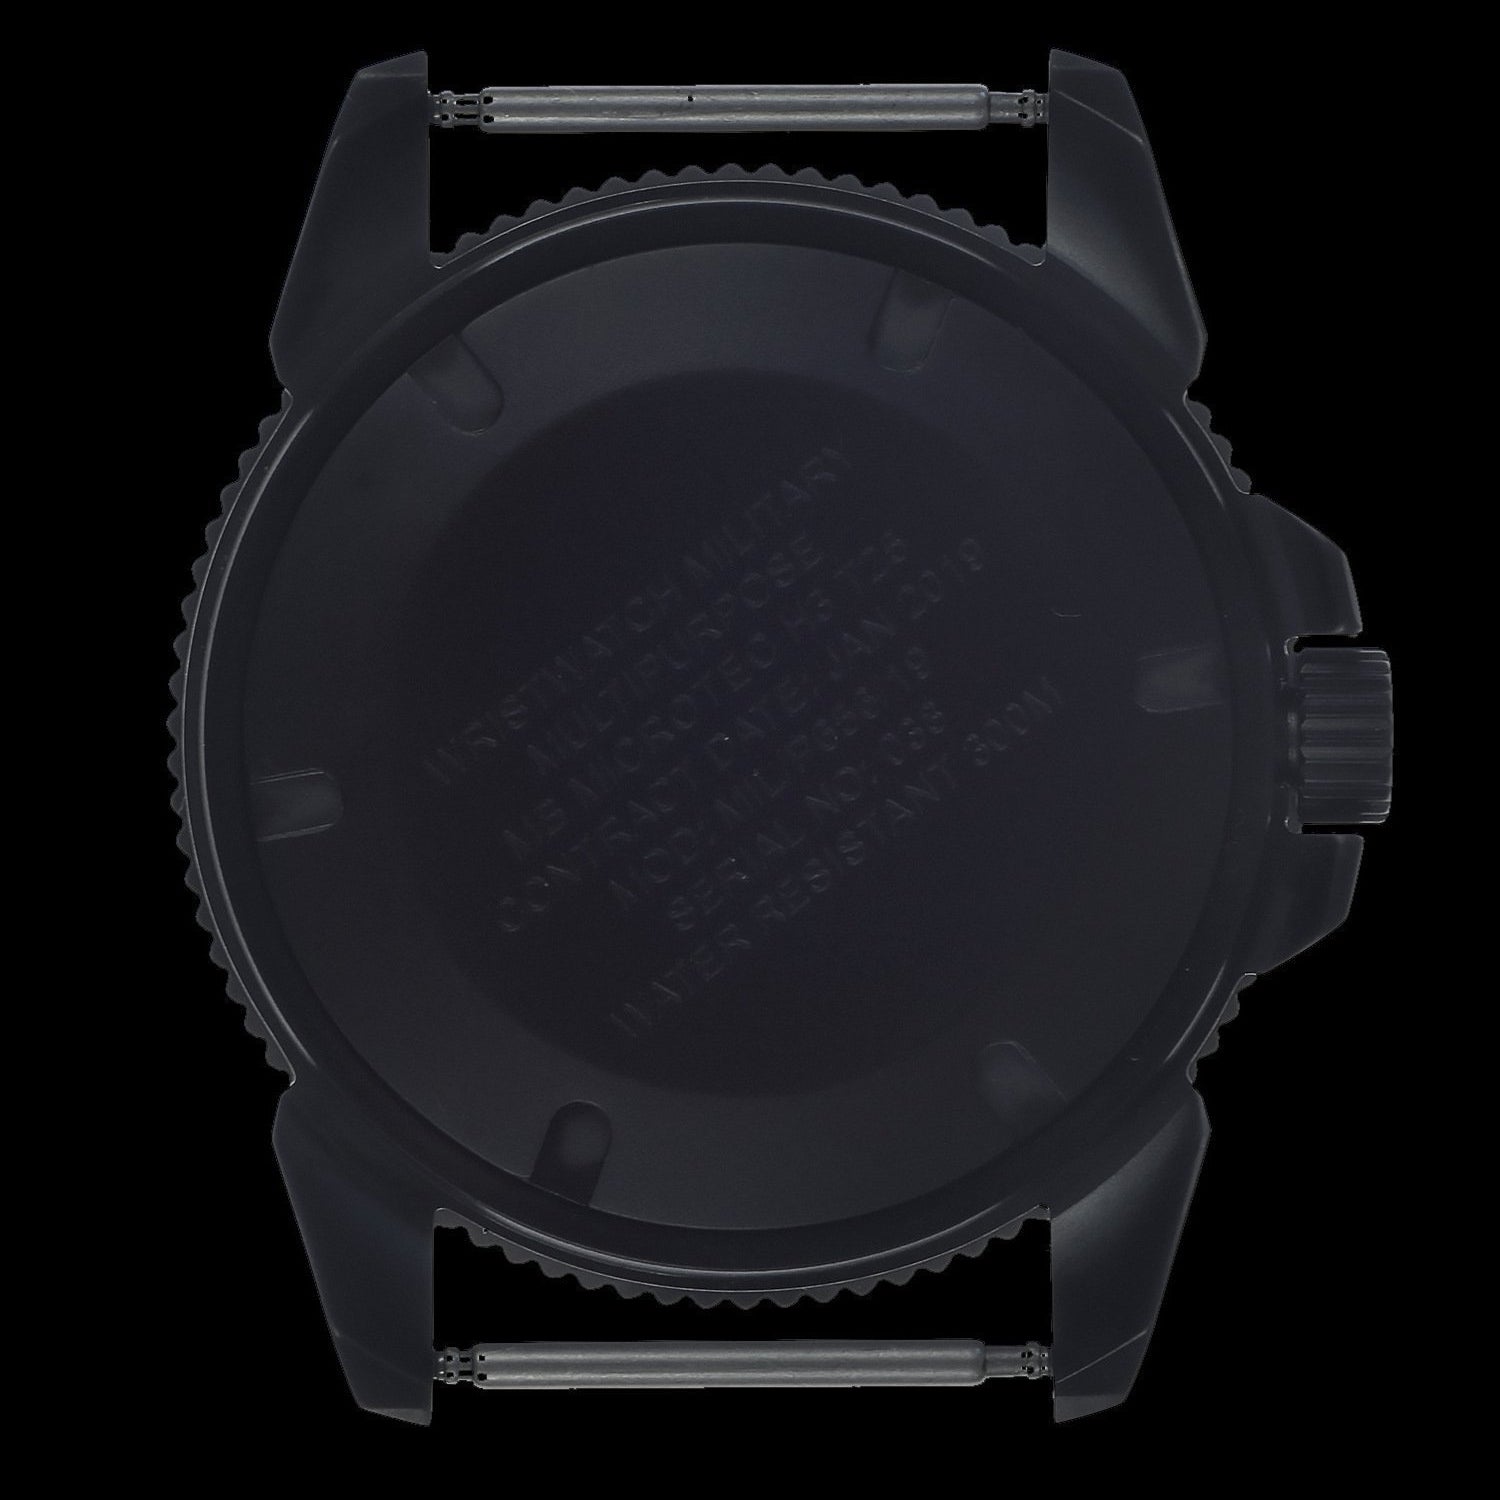 MWC P656 Tactical Series Watch with GTLS Tritium Quartz (Date)